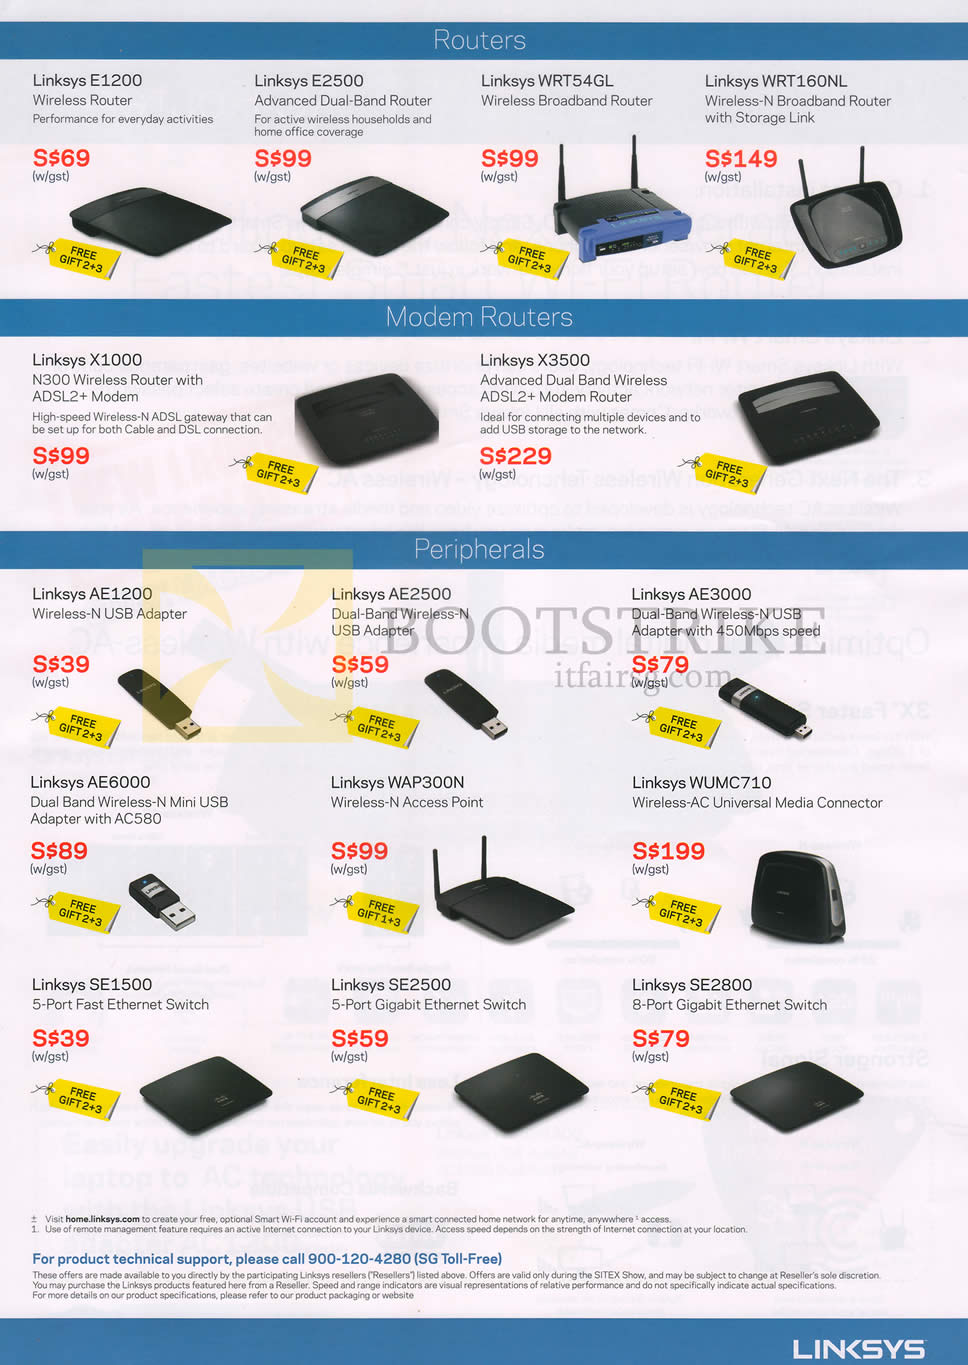 SITEX 2013 price list image brochure of Linksys Wireless Routers, Modems, USB Adapters, Switch, E1200, E2500, WRT54GL, WRT160NL, X1000, AE1200, AE2500, AE6000, WAP300N, WUMC710, SE1500, SE2500, SE2800